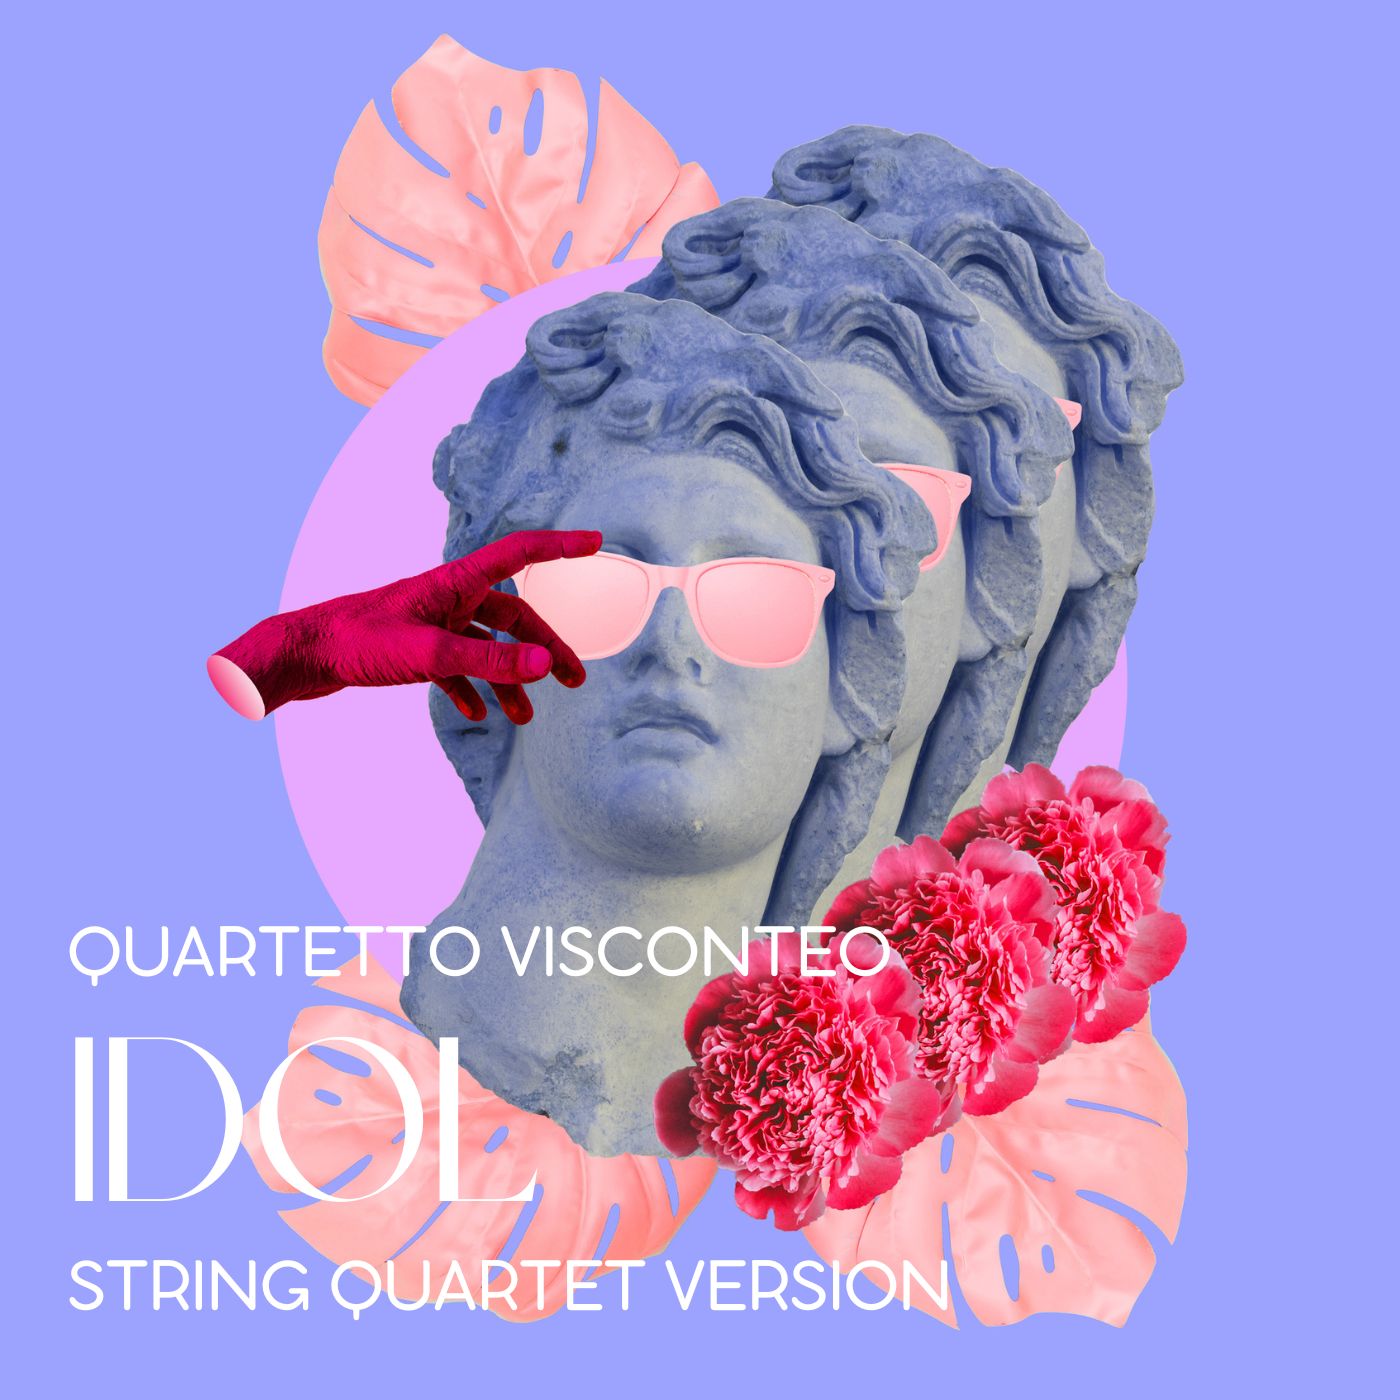 Idol (String Quartet Version, Live)